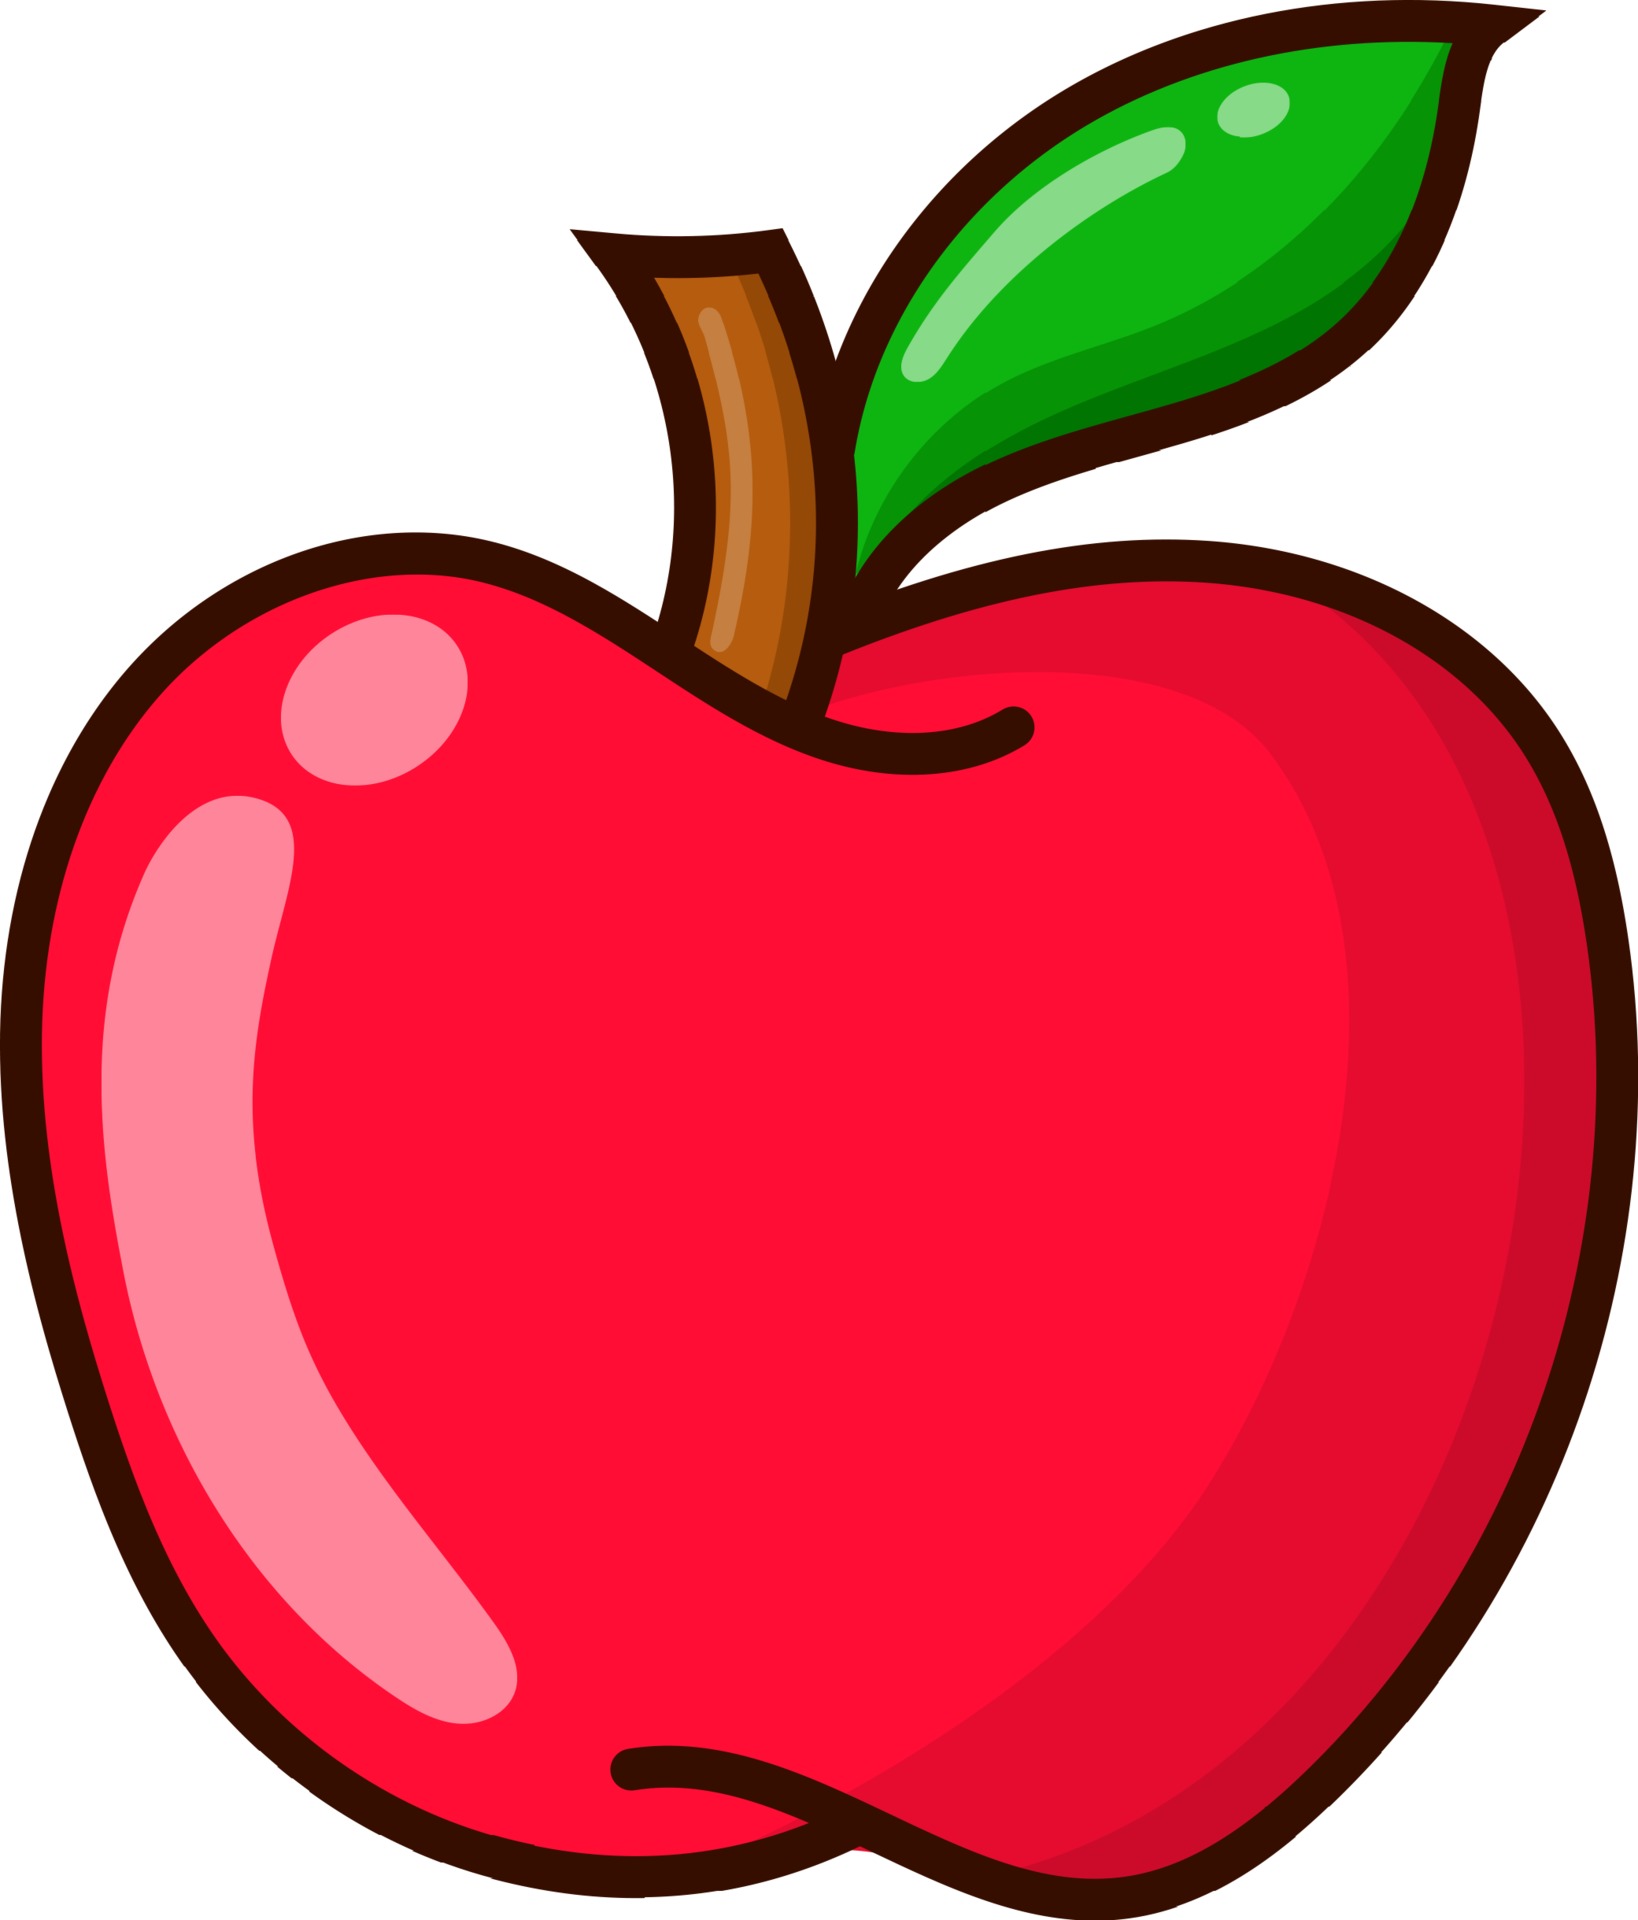 Cartoon of apple